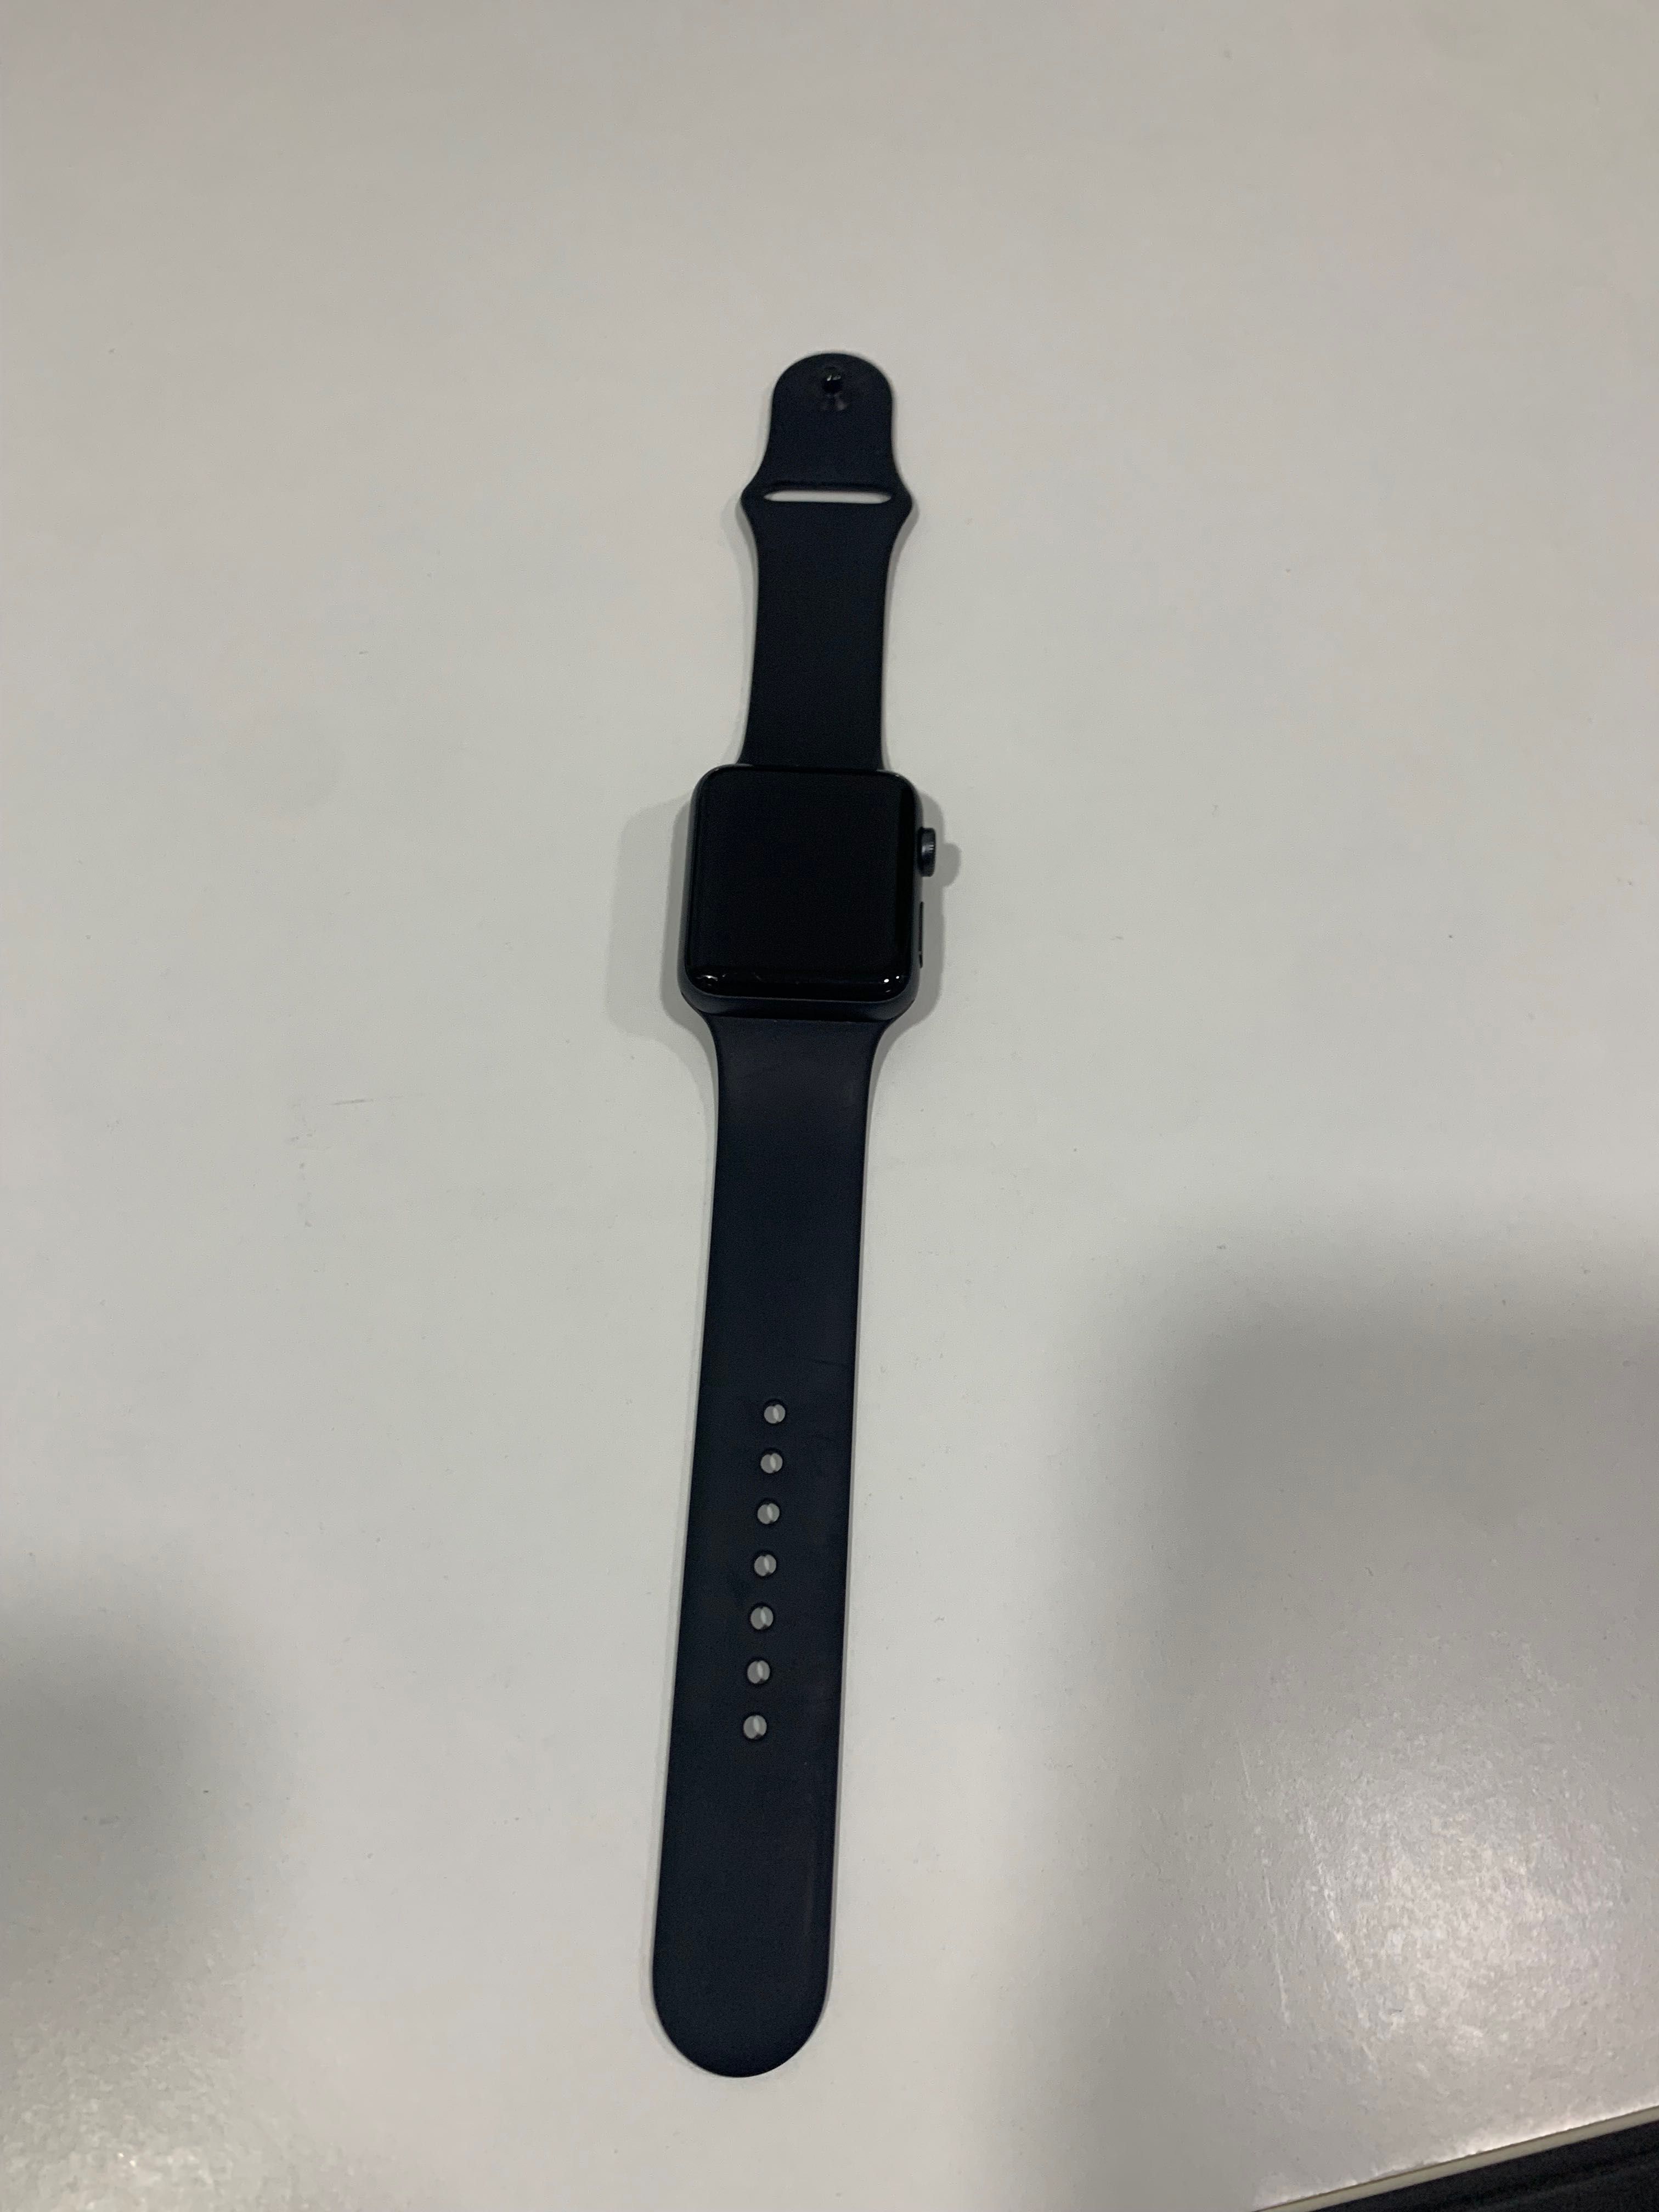 Apple Watch Series 3 “Como Novo”